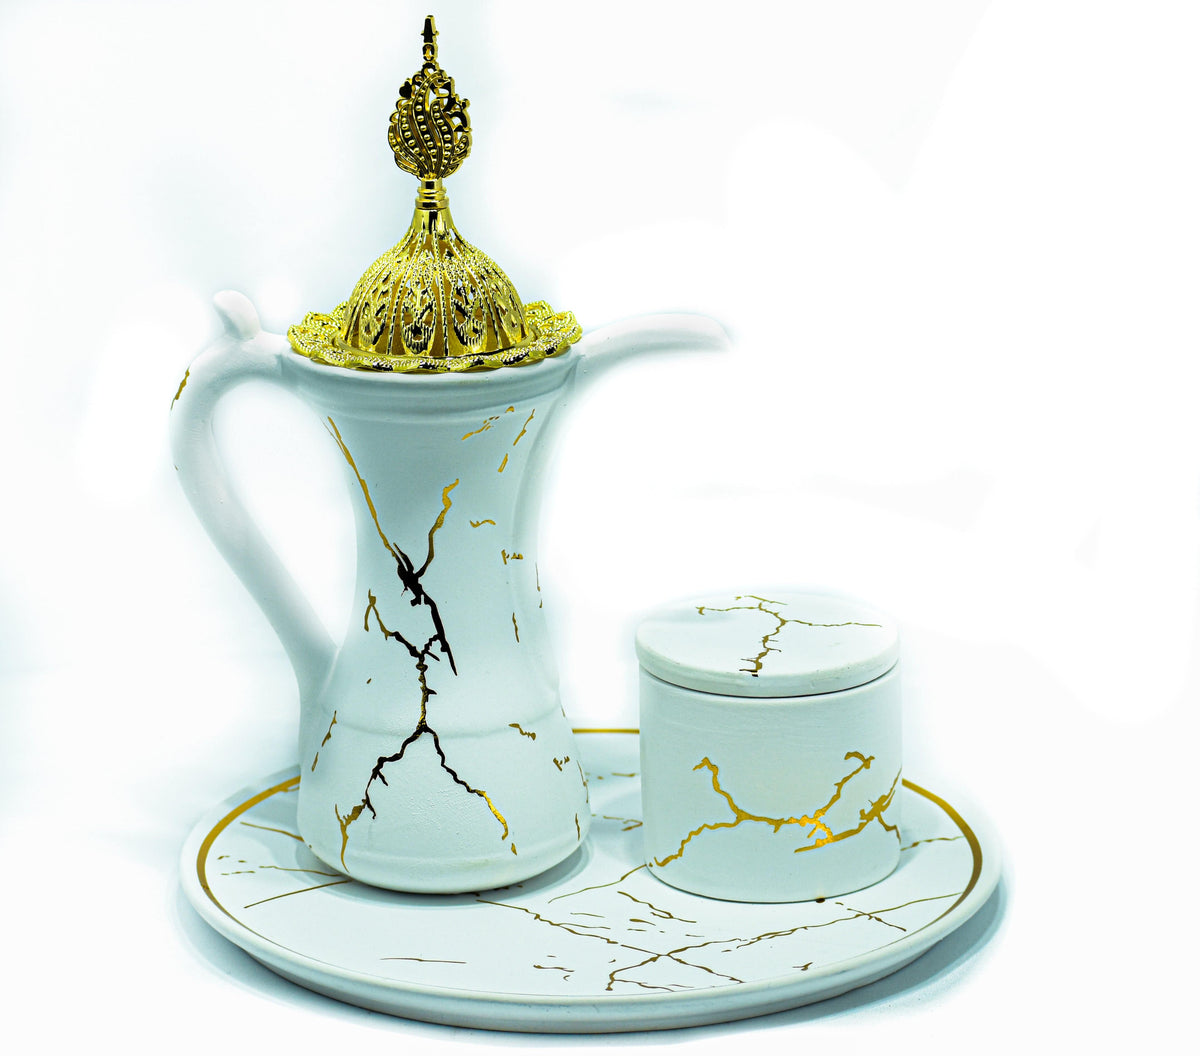 Marble Design Royal Bakhoor Tea Set w/ Circular Tray - White by Intense Oud - Intense oud